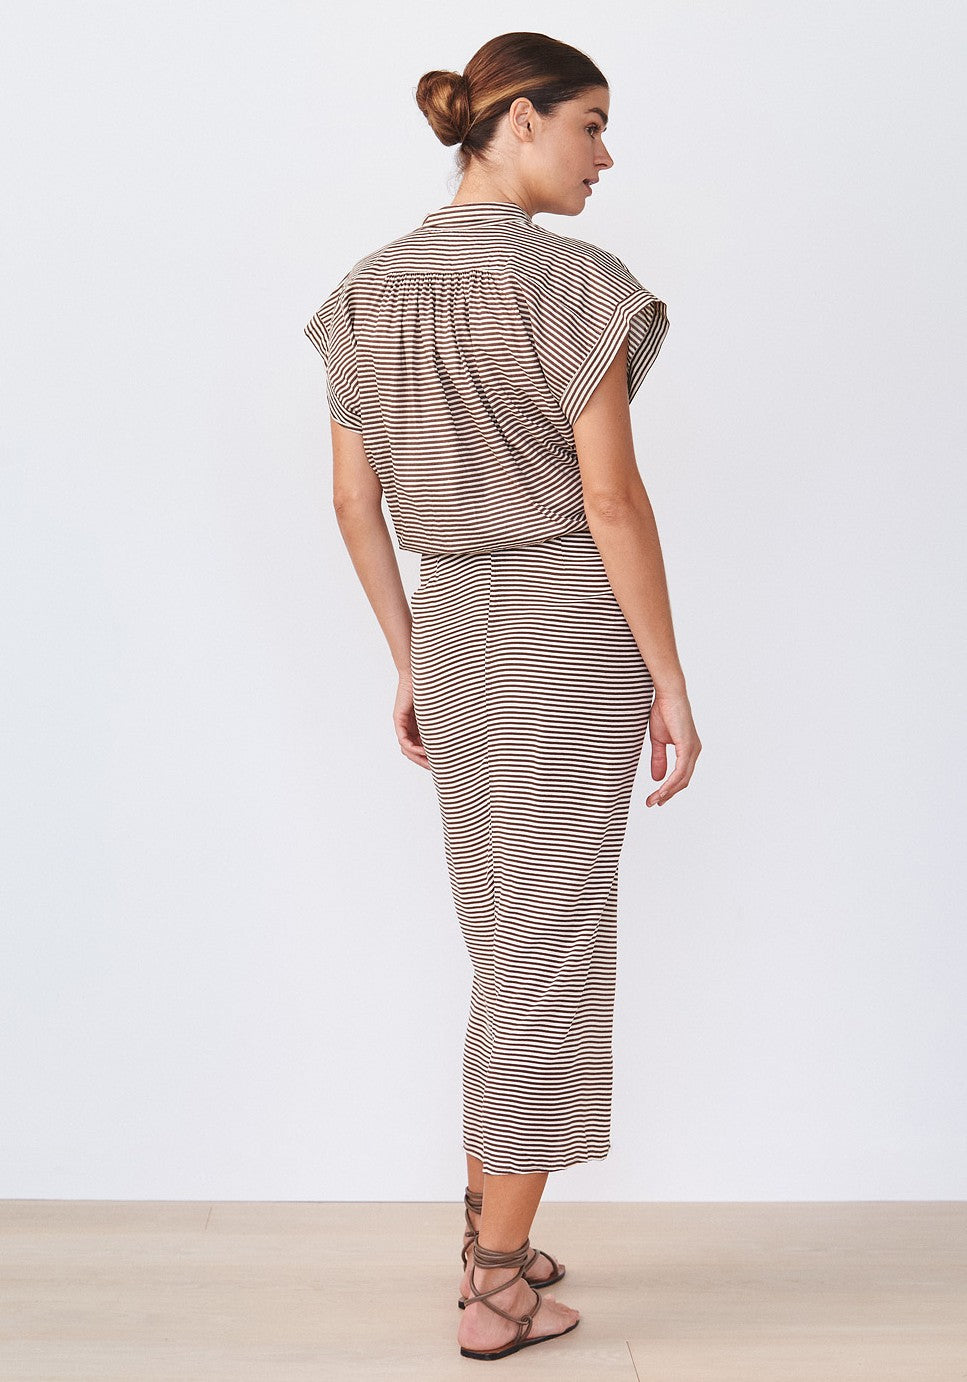 Acacia Rumi Stretch Silk Skirt in Brooklyn Stripe